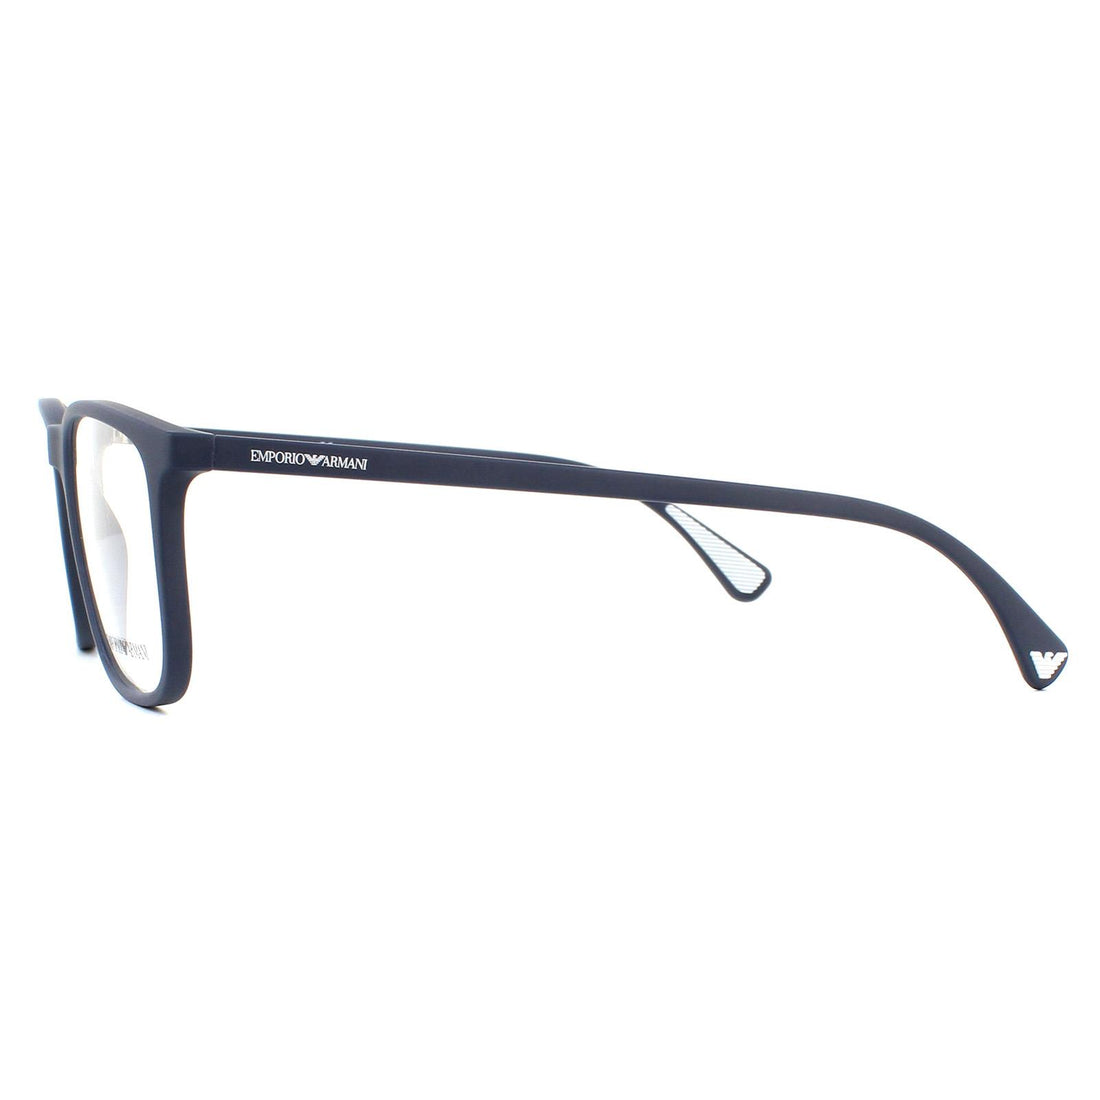 Emporio Armani Glasses Frames EA3177 5088 Matte Blue Men